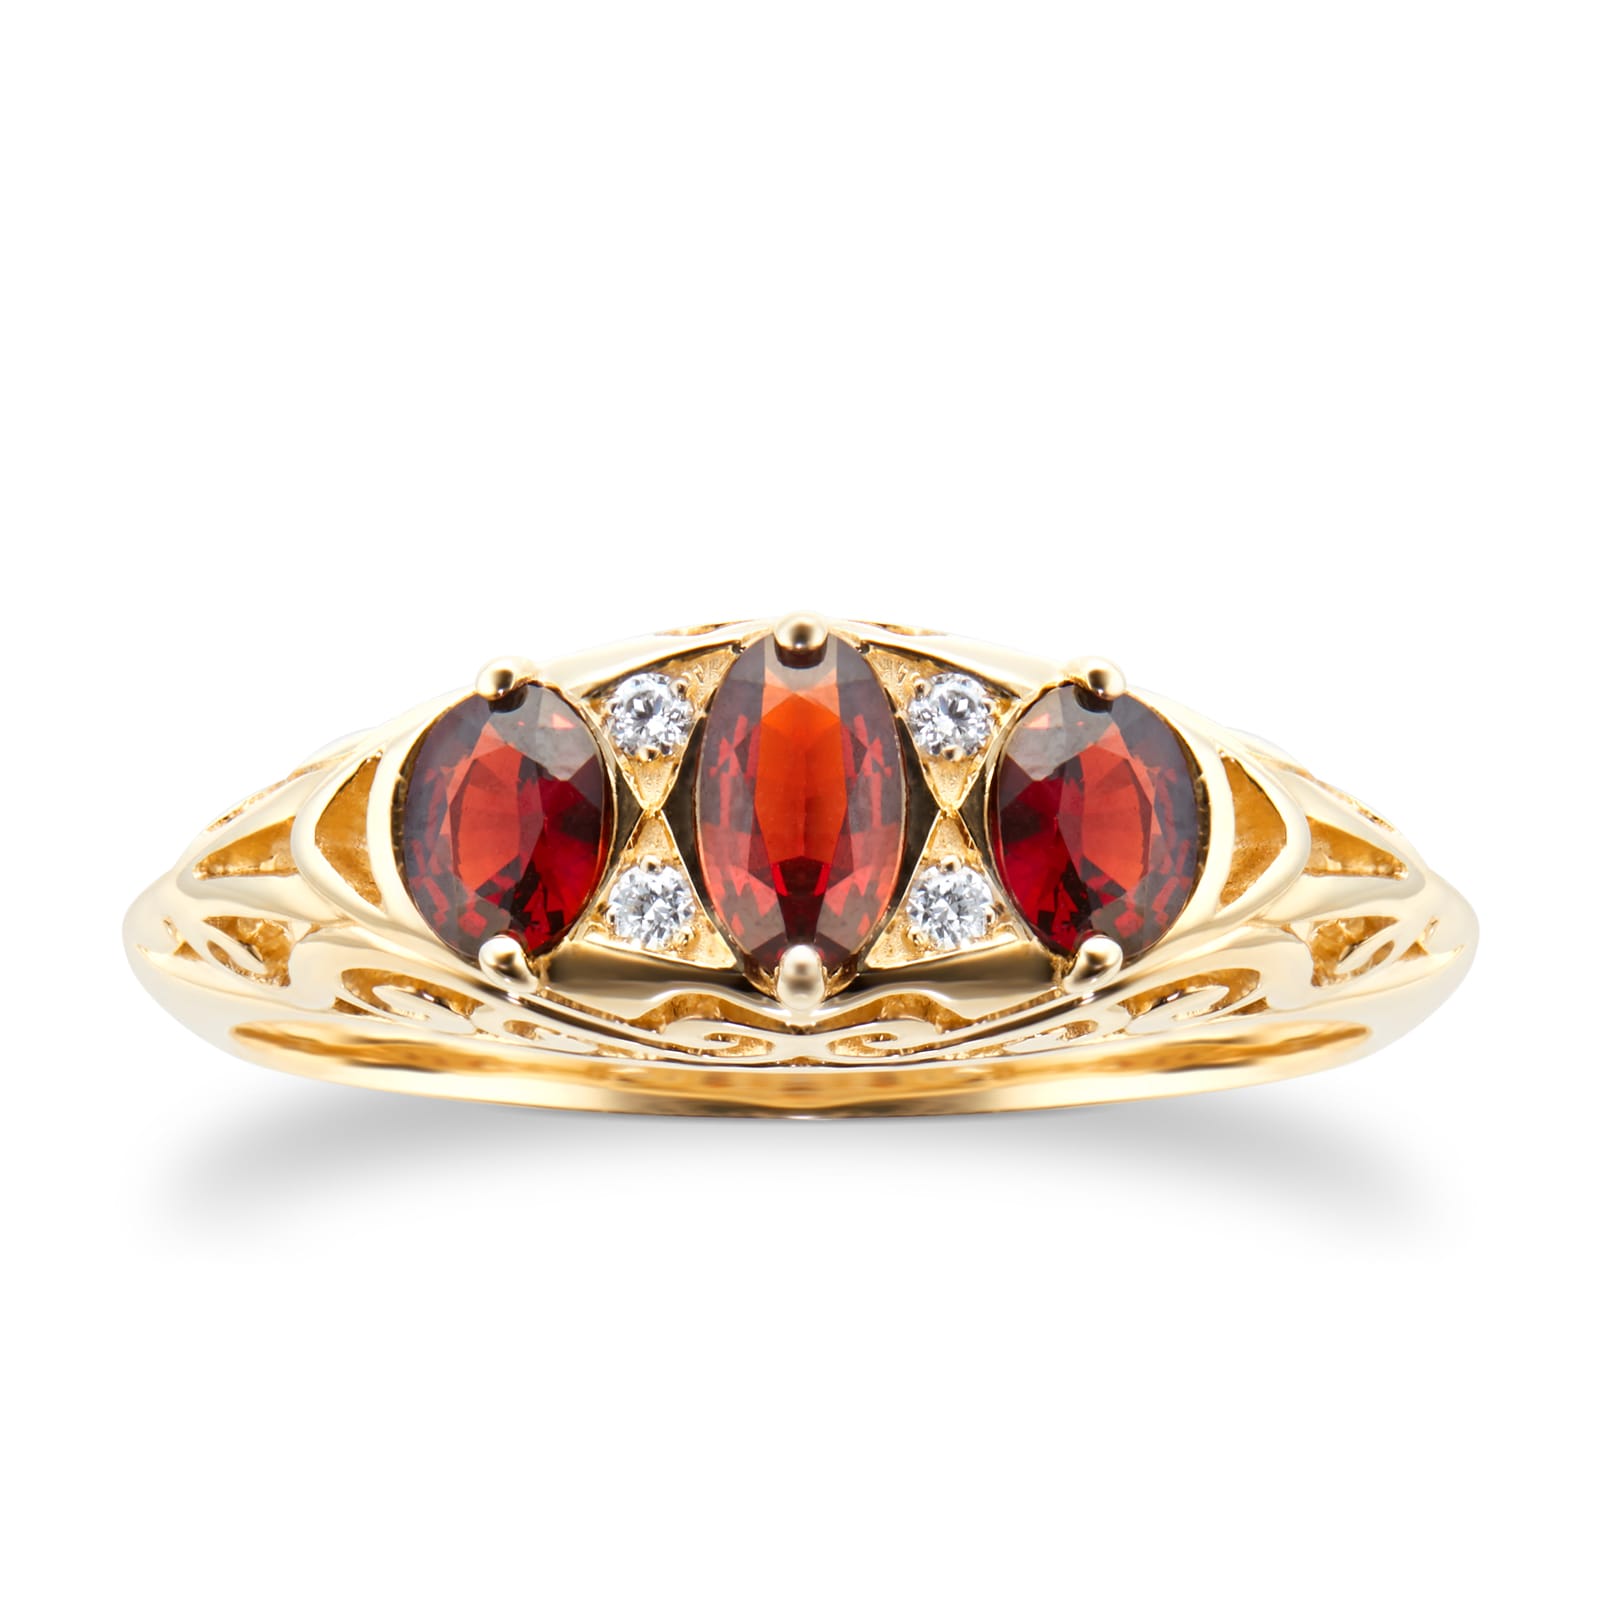 9ct Yellow Gold Victorian Style 3 Stone Garnet & Diamond Ring - Ring Size B.5